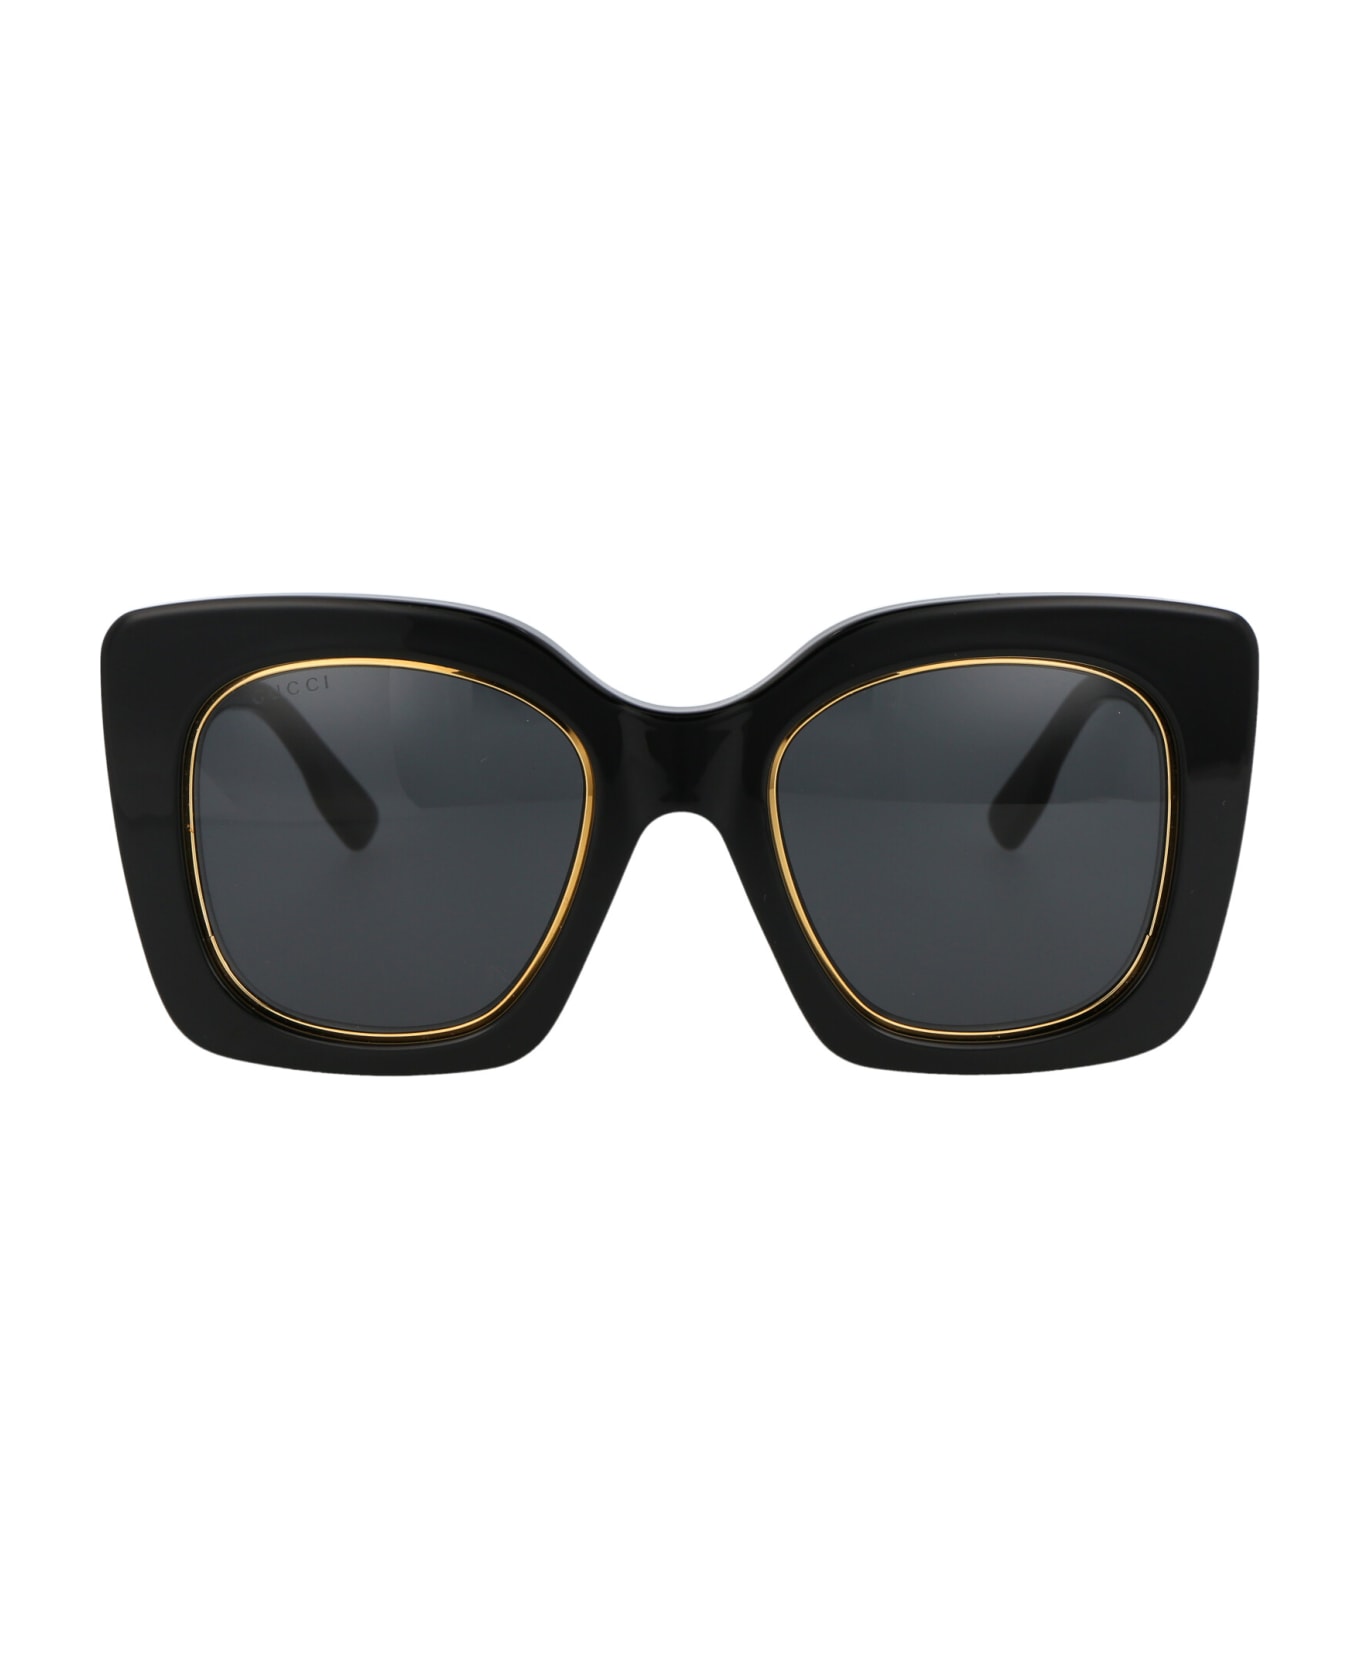 Gucci Eyewear Gg1151s Sunglasses - 001 BLACK BLACK GREY